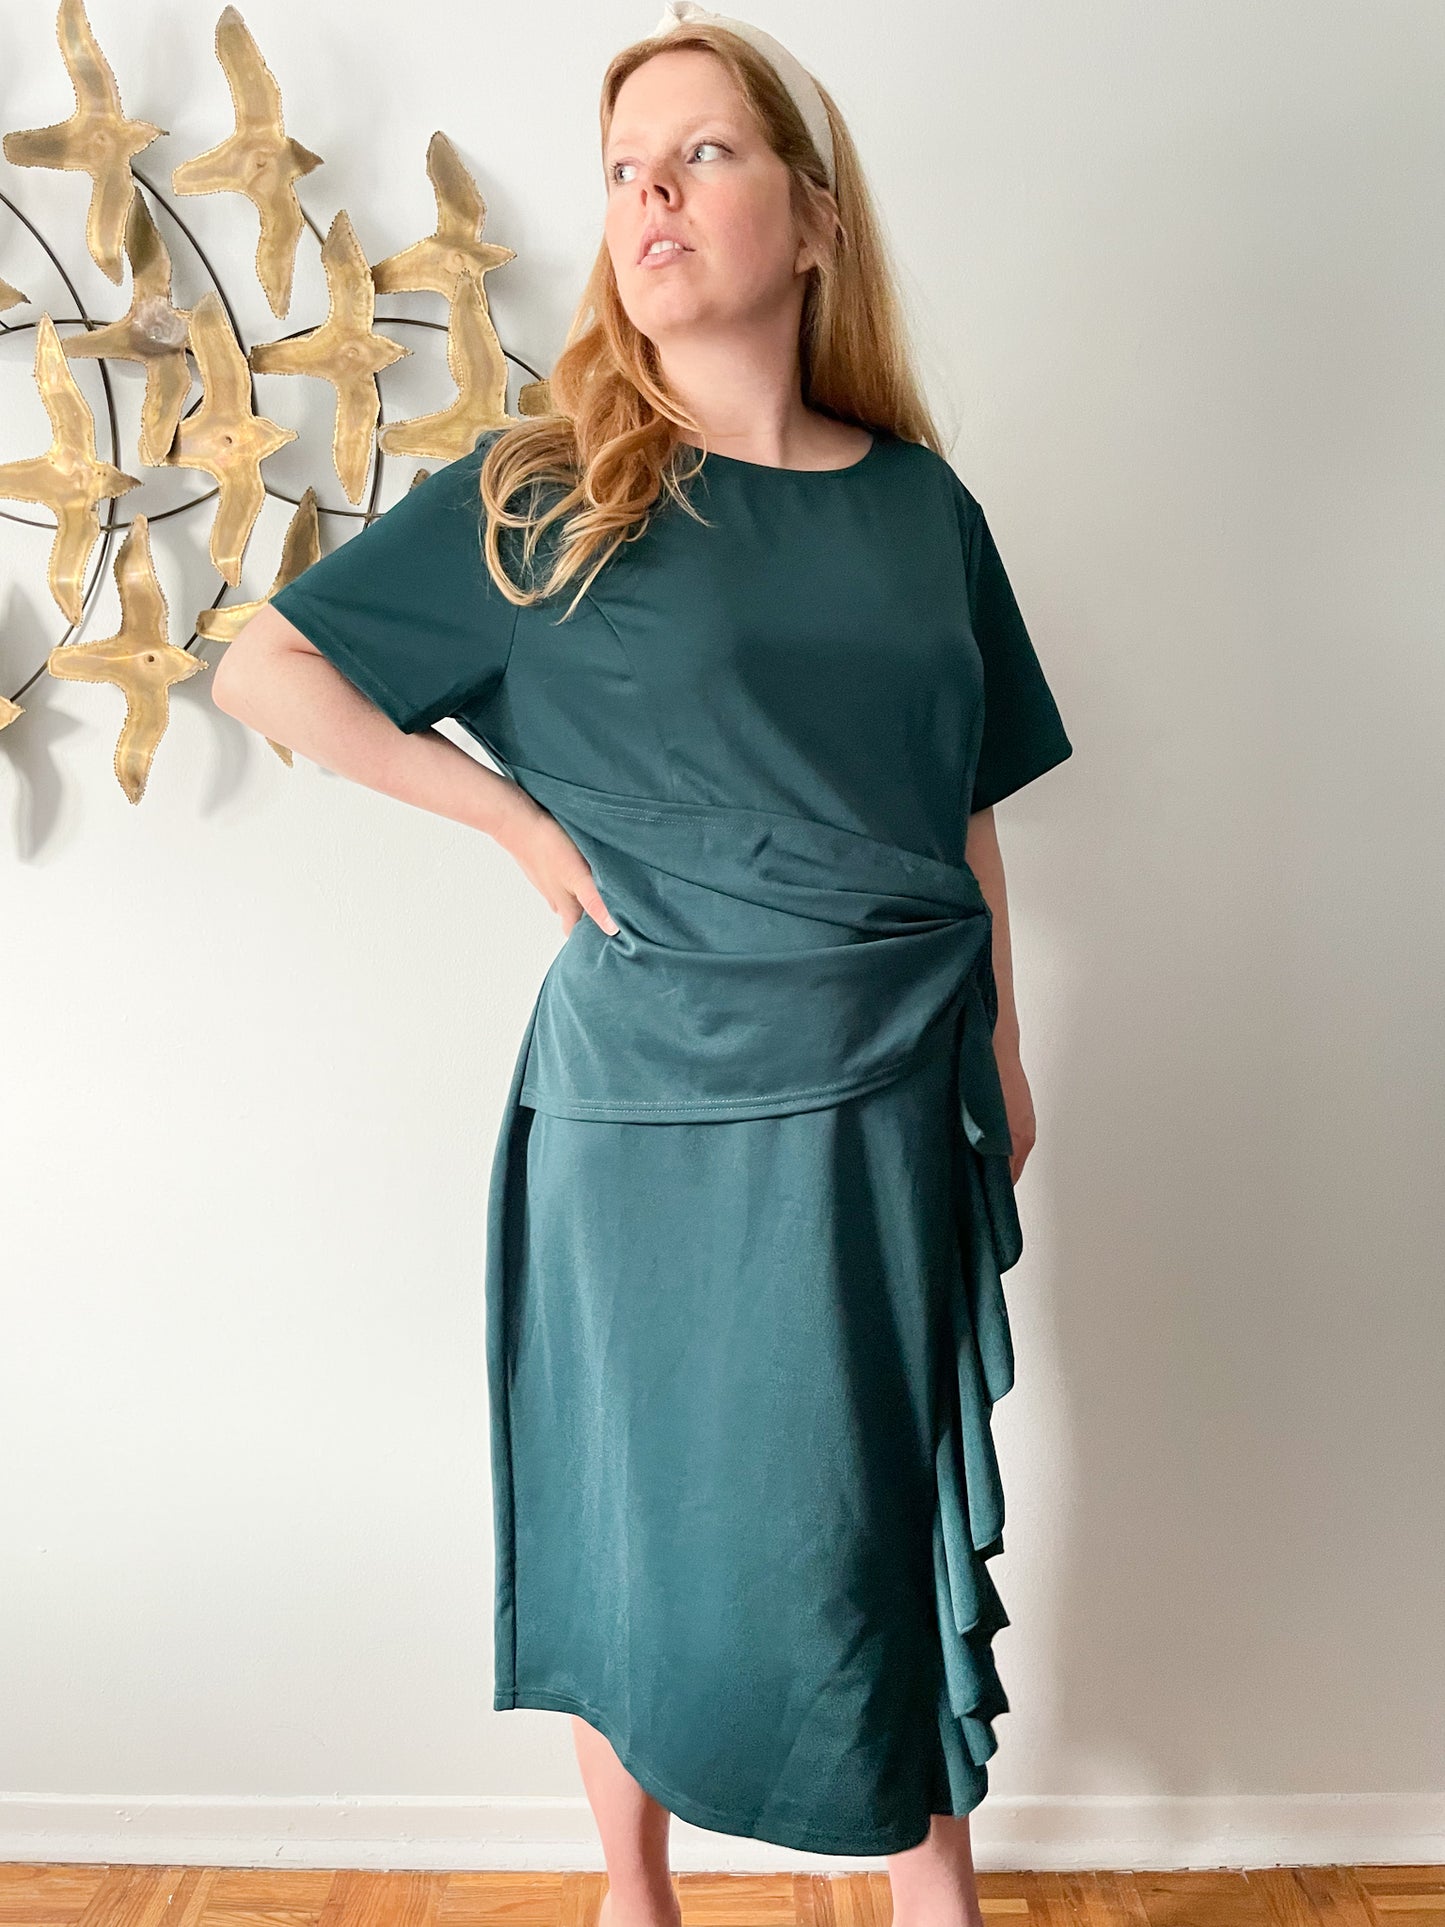 Hannah Nicole Teal Wrap Style Dress with Bow NWT - Size 20